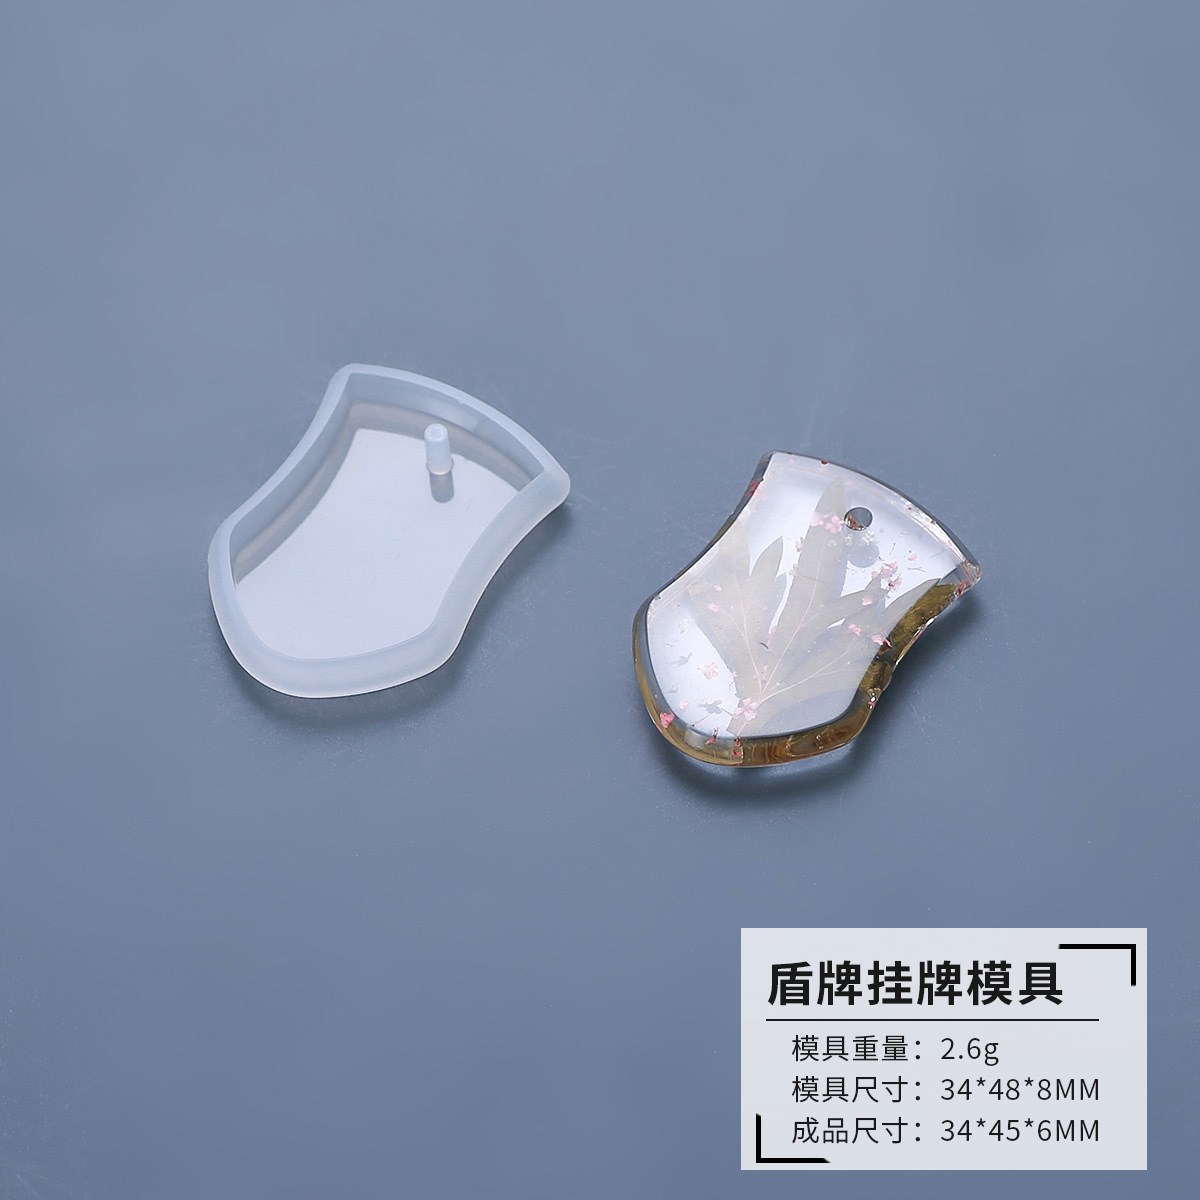 2:Shield listing mold 34*48*8mm